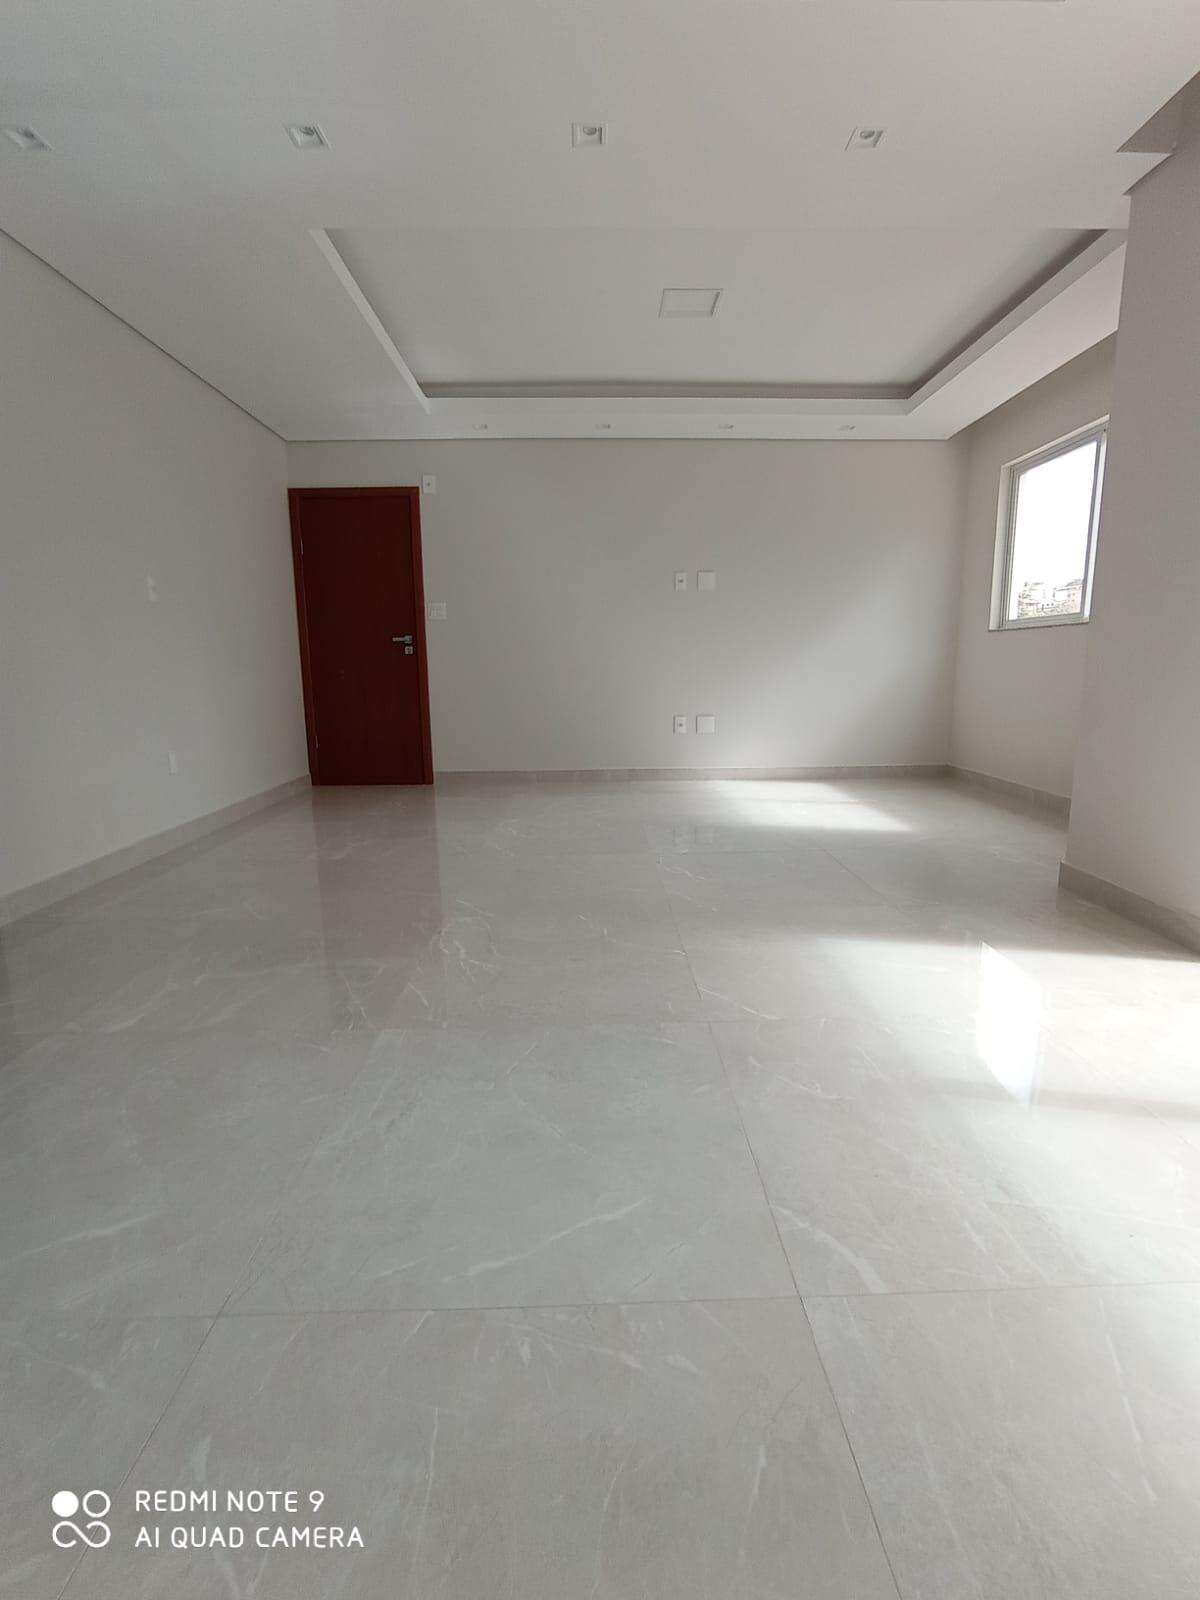 Apartamento 3 quartos para aluguel no Rafael José de Lima: d145aede-2-whatsapp-image-2023-06-05-at-12.51.59.jpeg